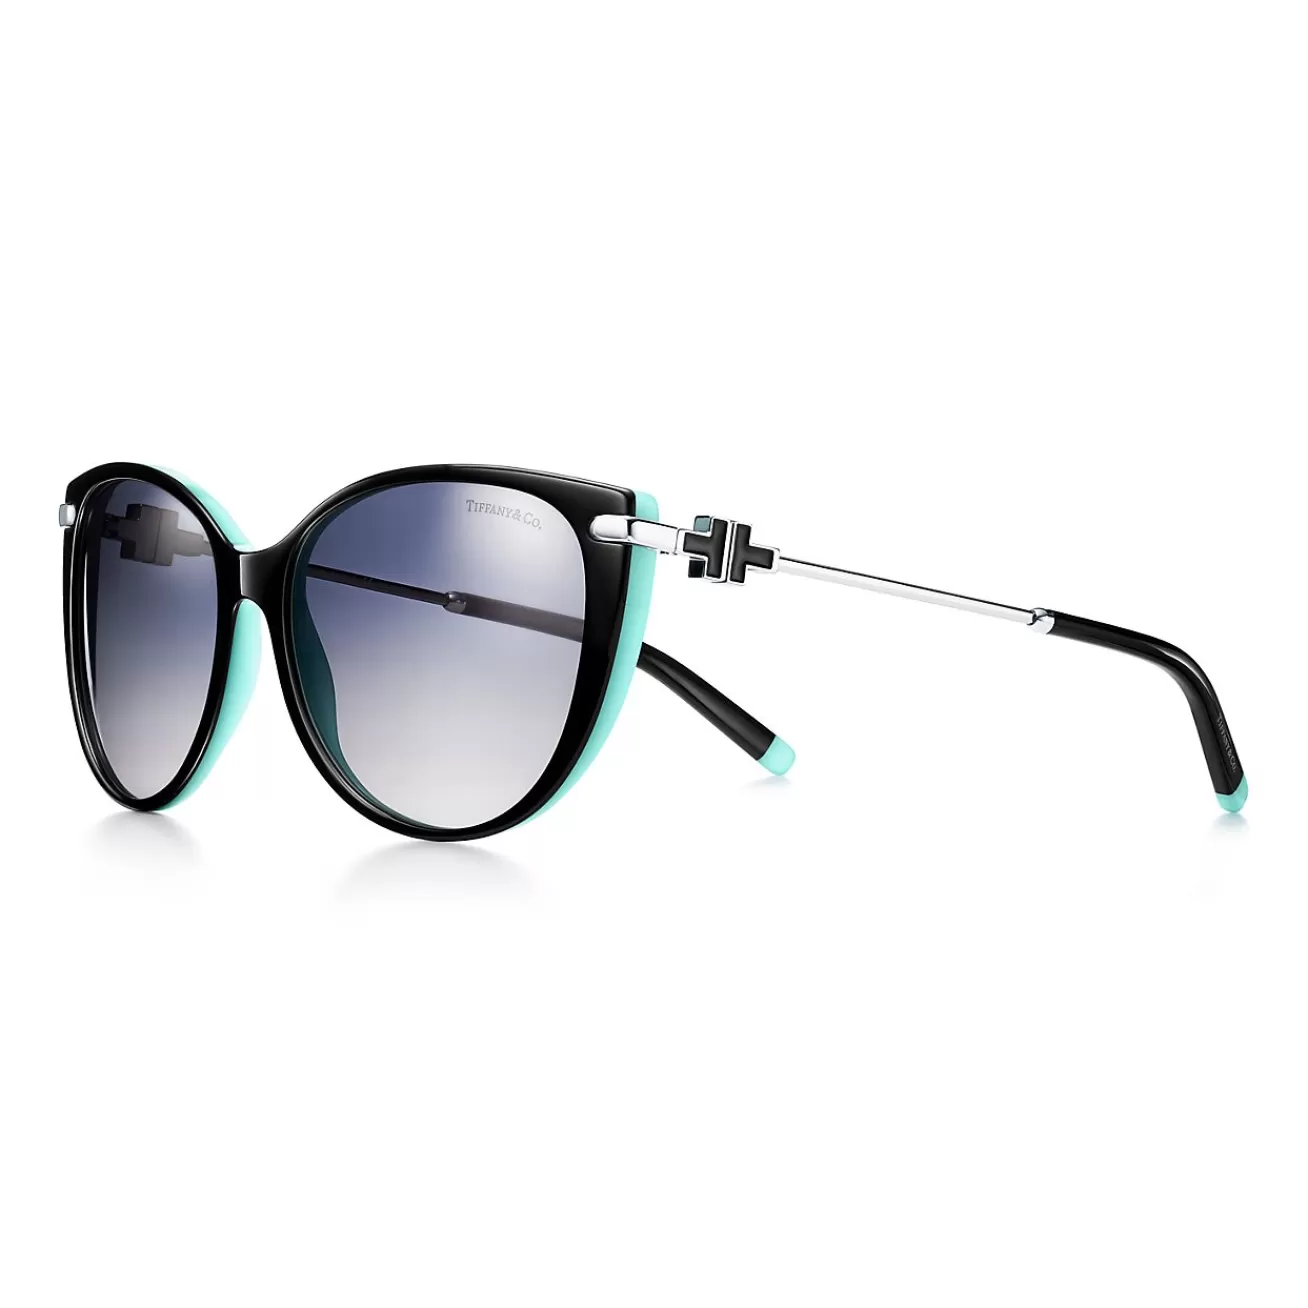 Tiffany & Co. Tiffany T Cat Eye Sunglasses in Black Acetate with Tiffany Blue® Enamel | ^ Tiffany T | Sunglasses